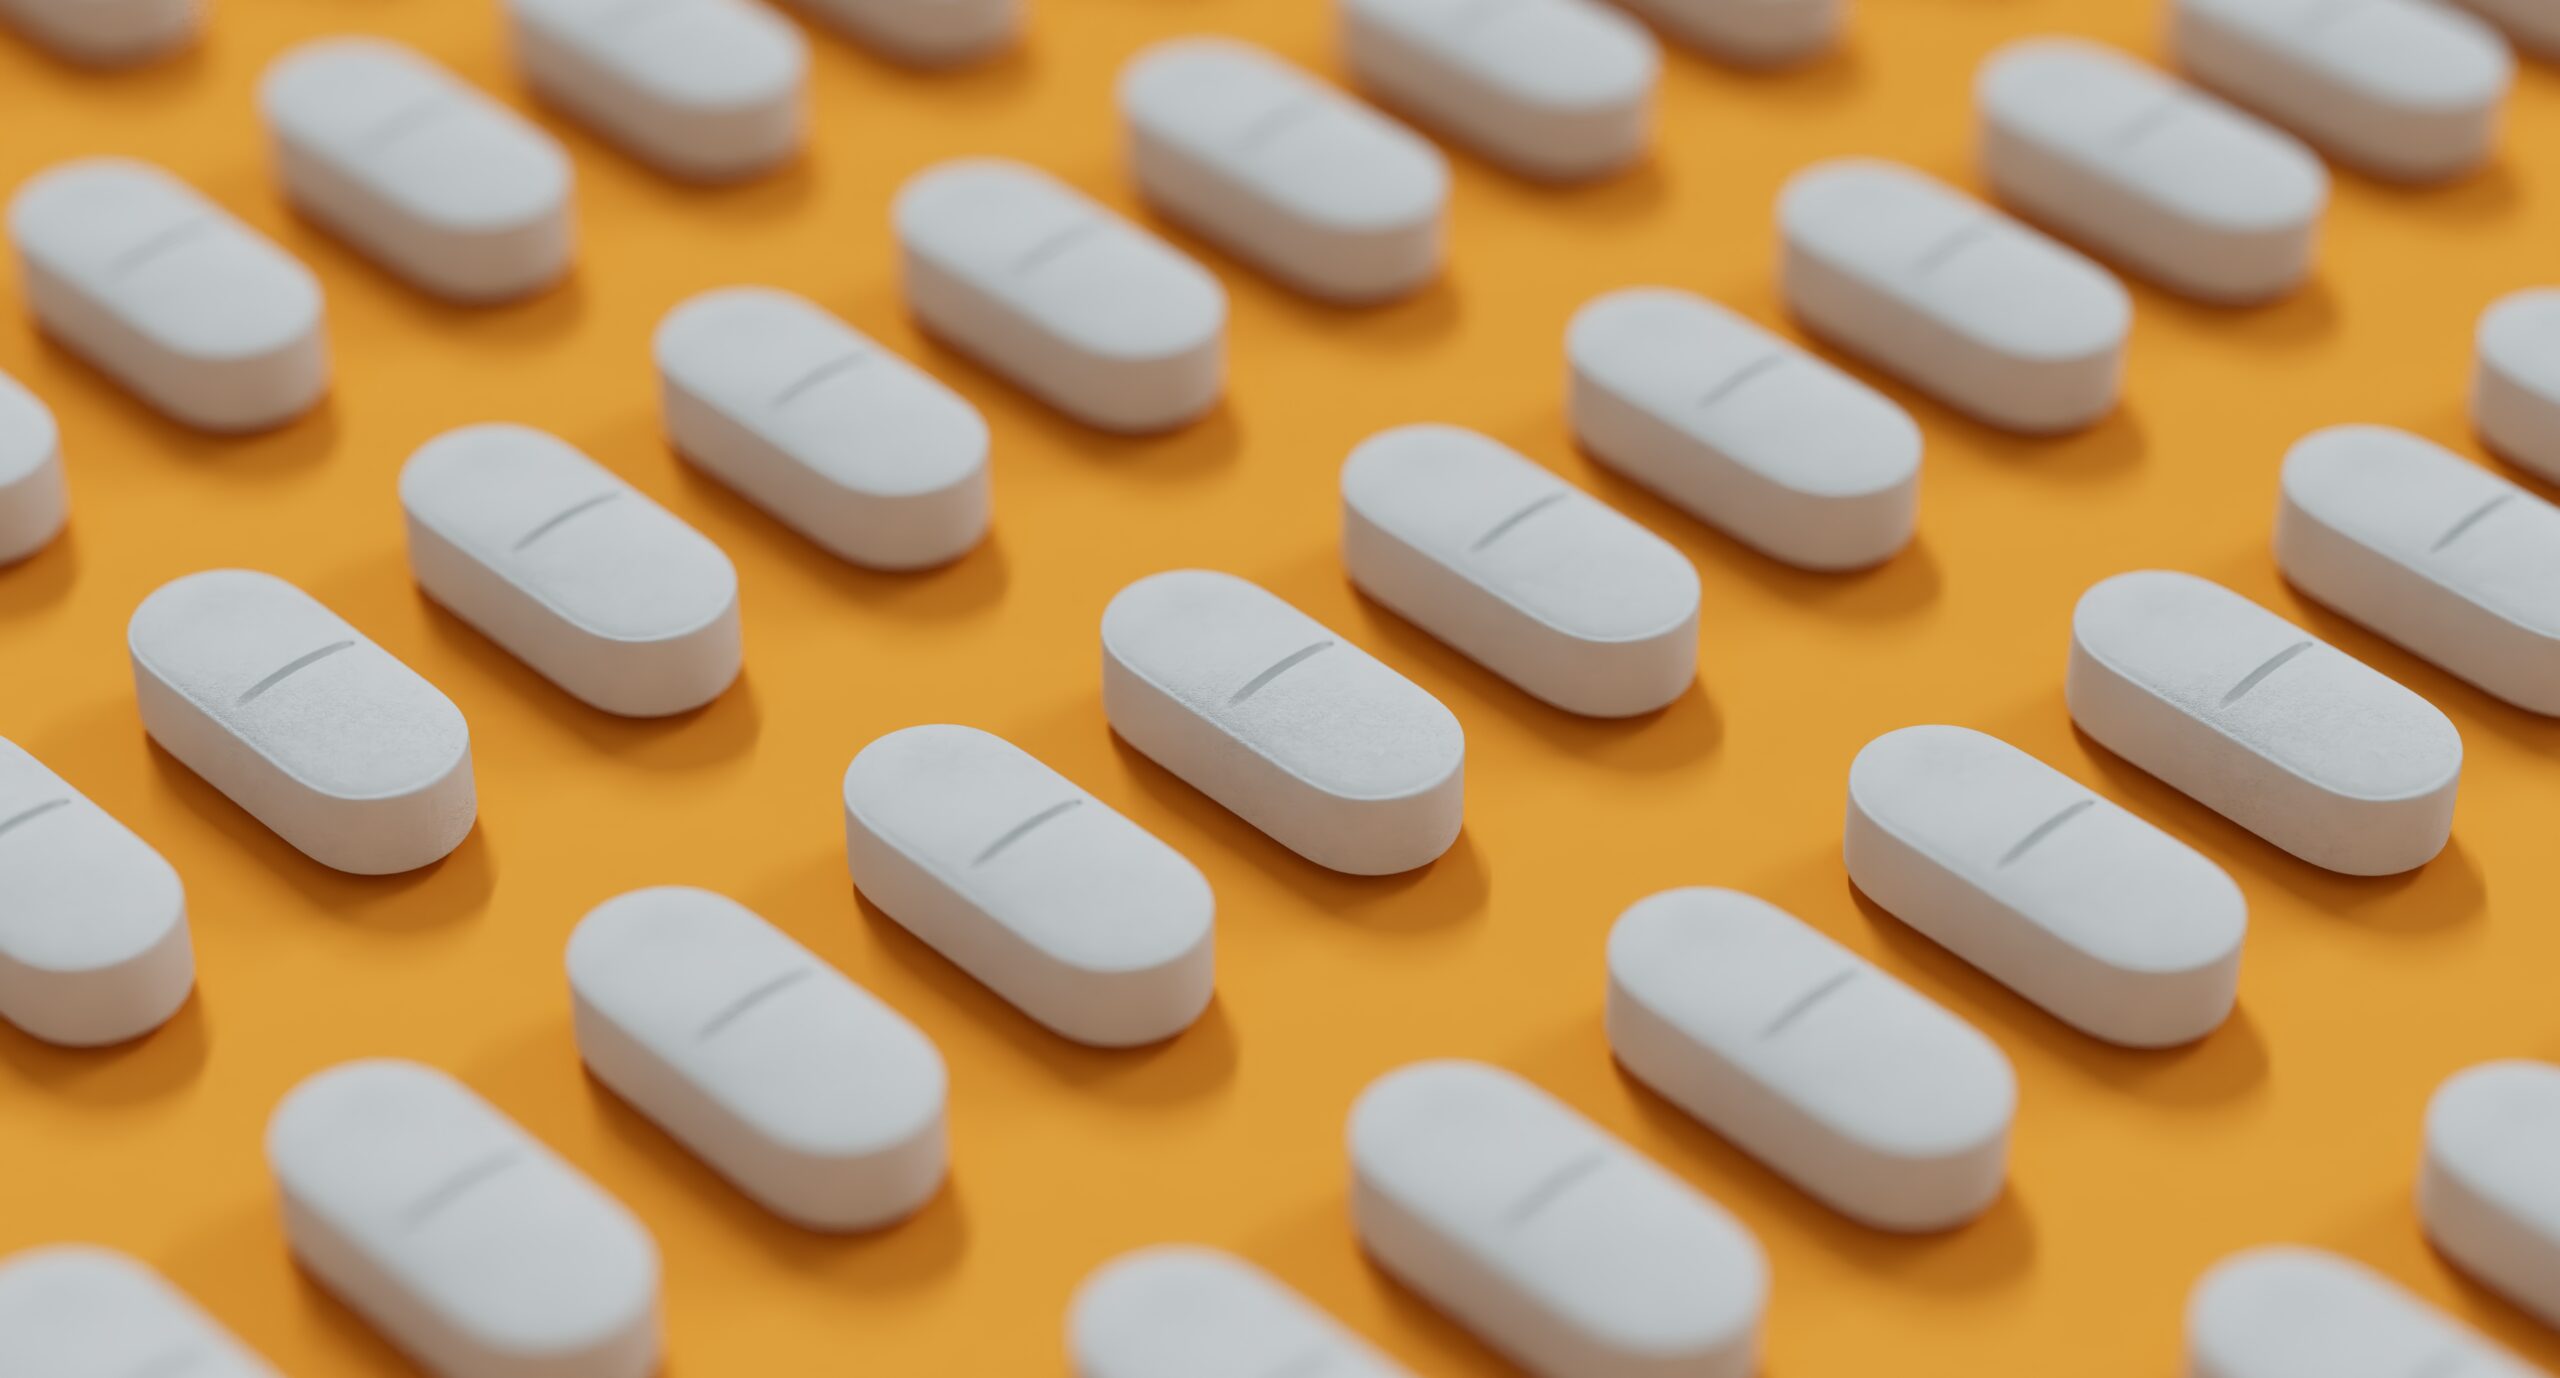 Medicine pill capsules healthcare